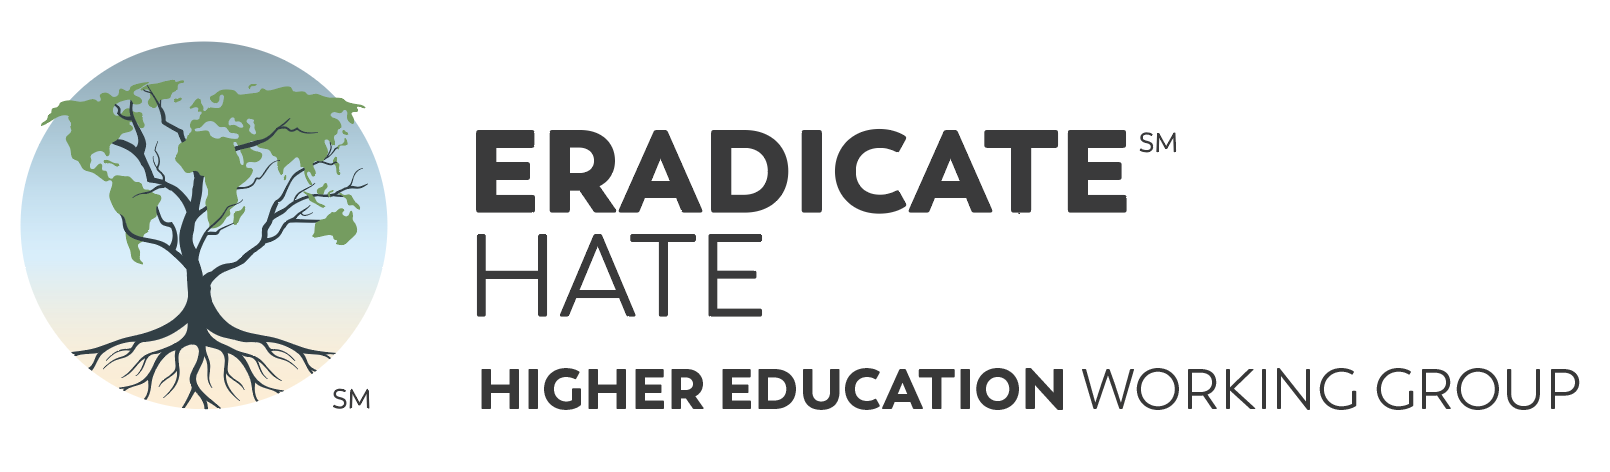 Eradicate Hate Higher Education Working Group logo